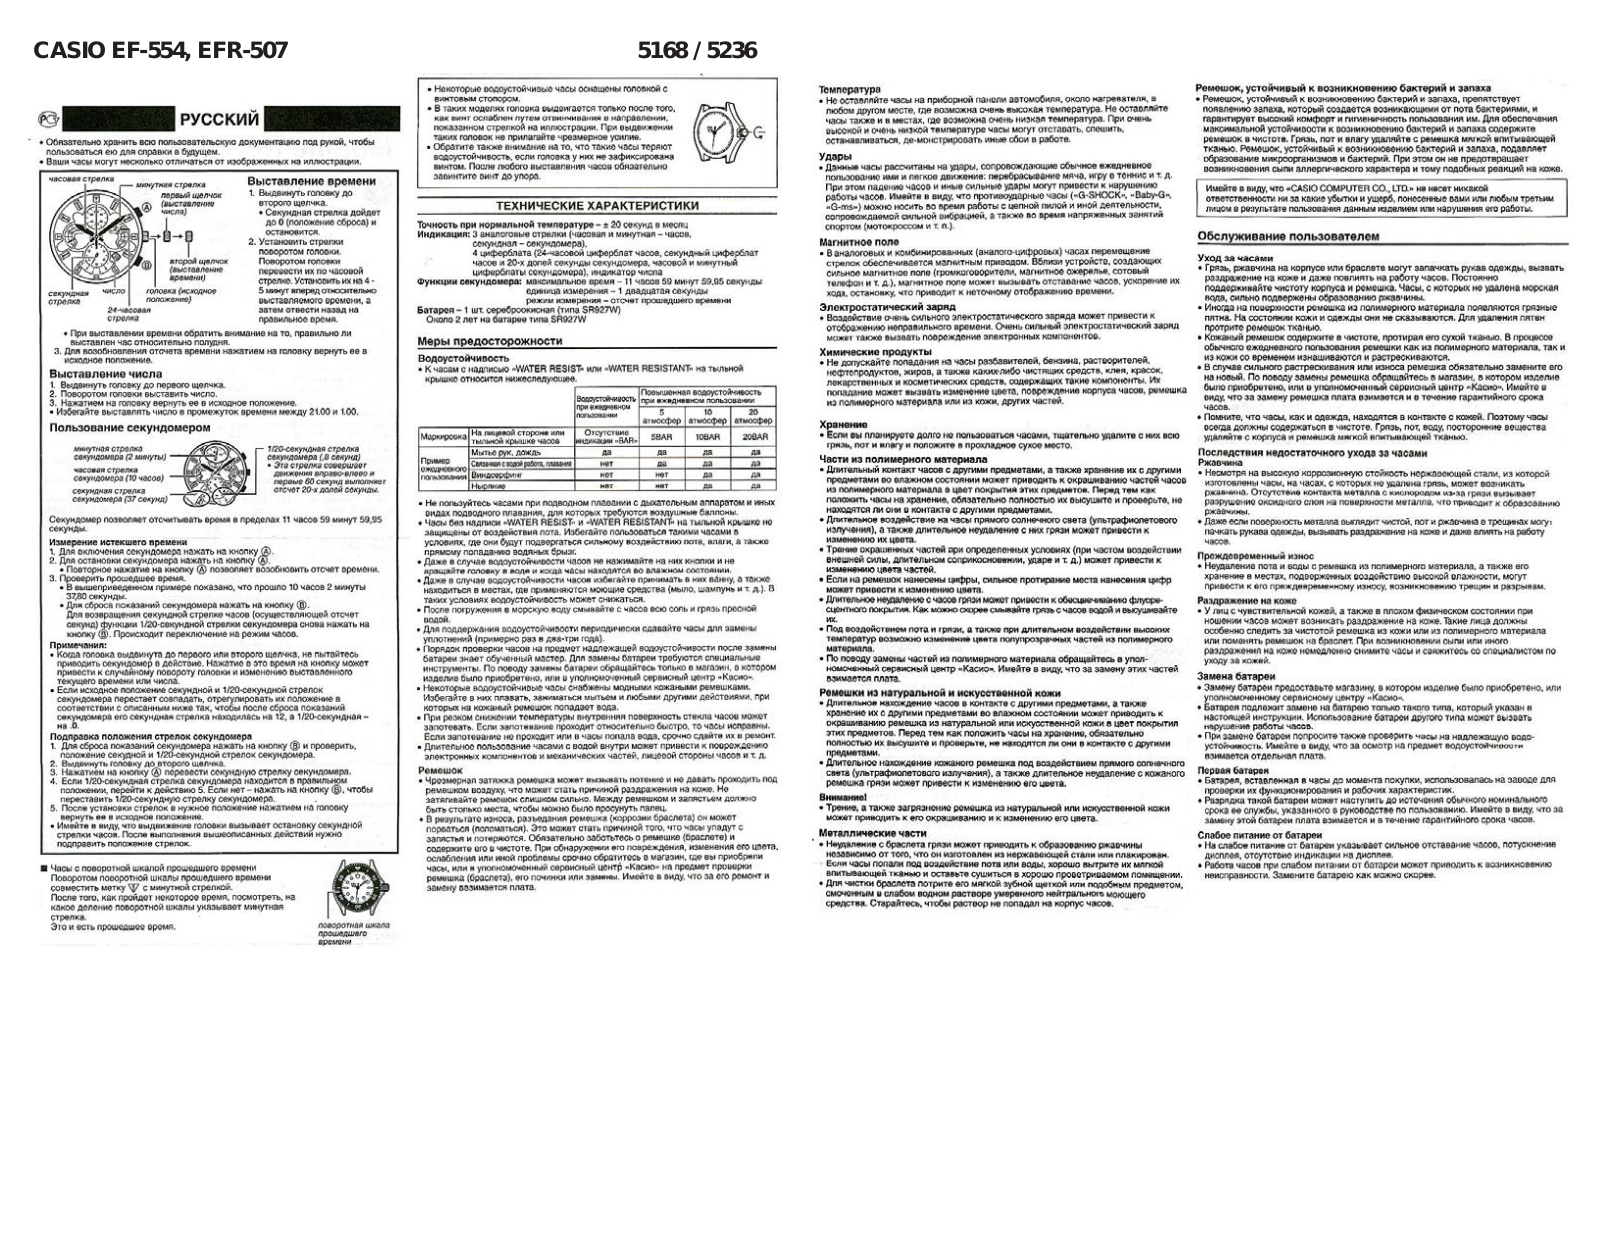 Casio EFR-507SP-1A User Manual